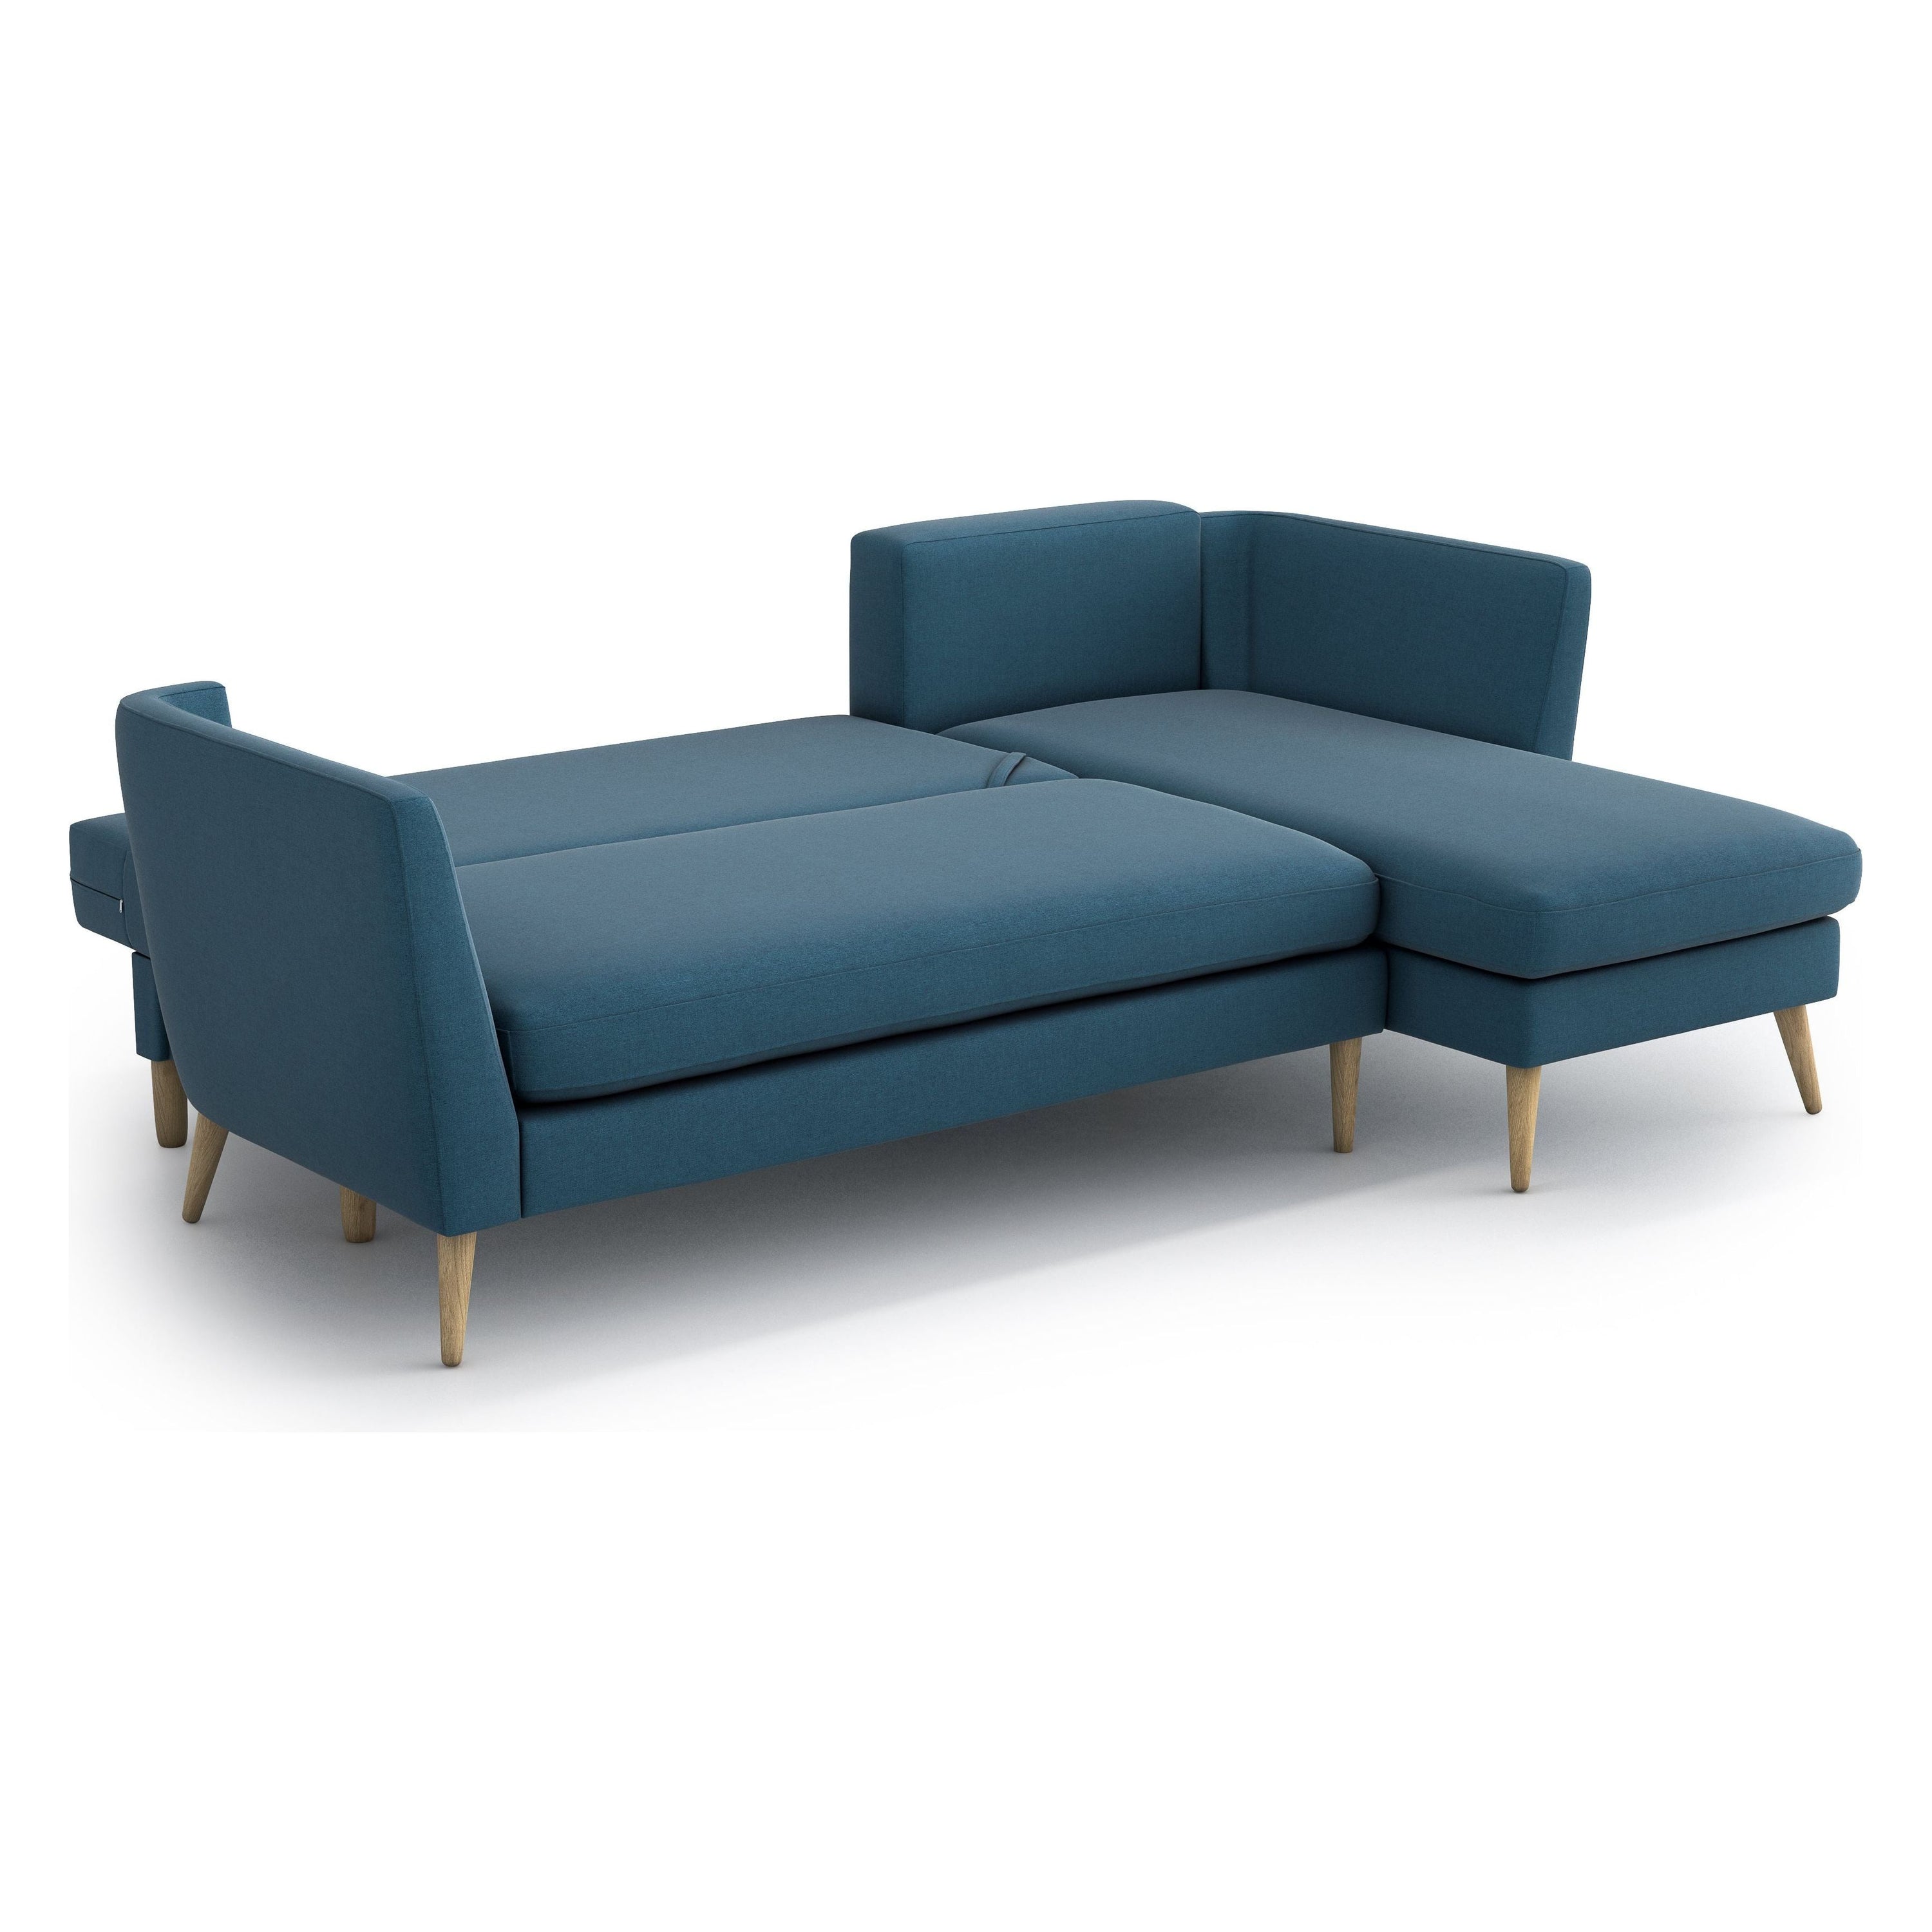 JANE kampinė sofa lova, mėlyna spalva, universali kampo pusė